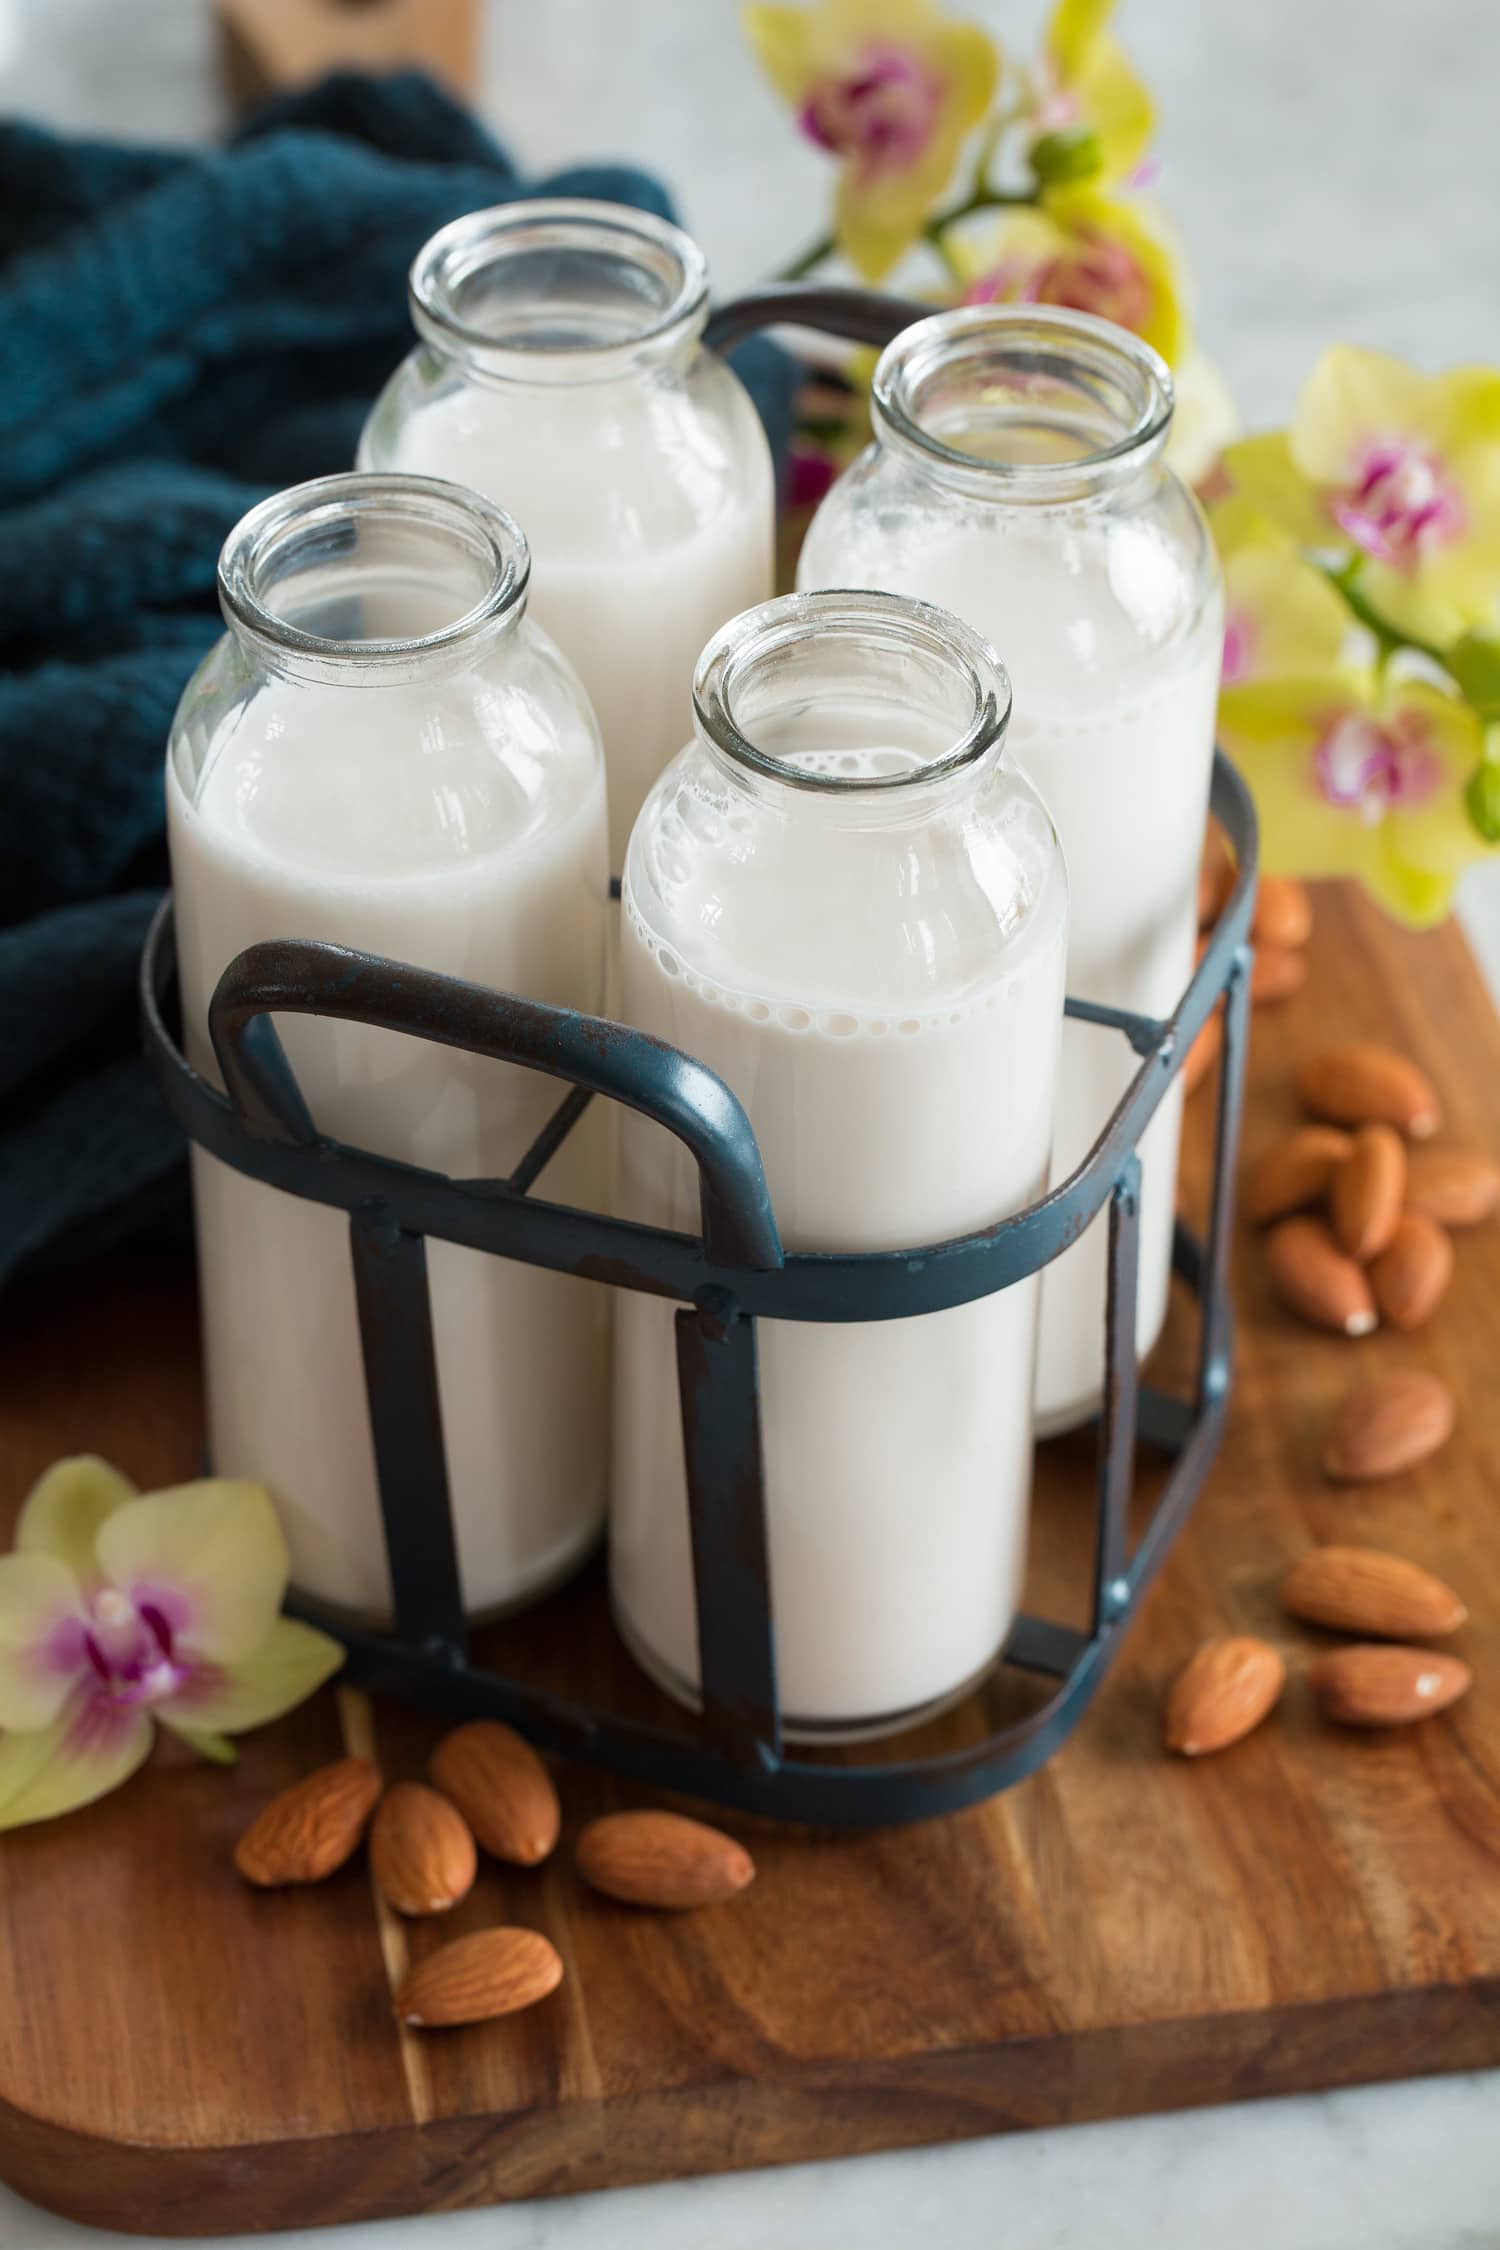 Four servings of almond milk in a vintage milk carrier.